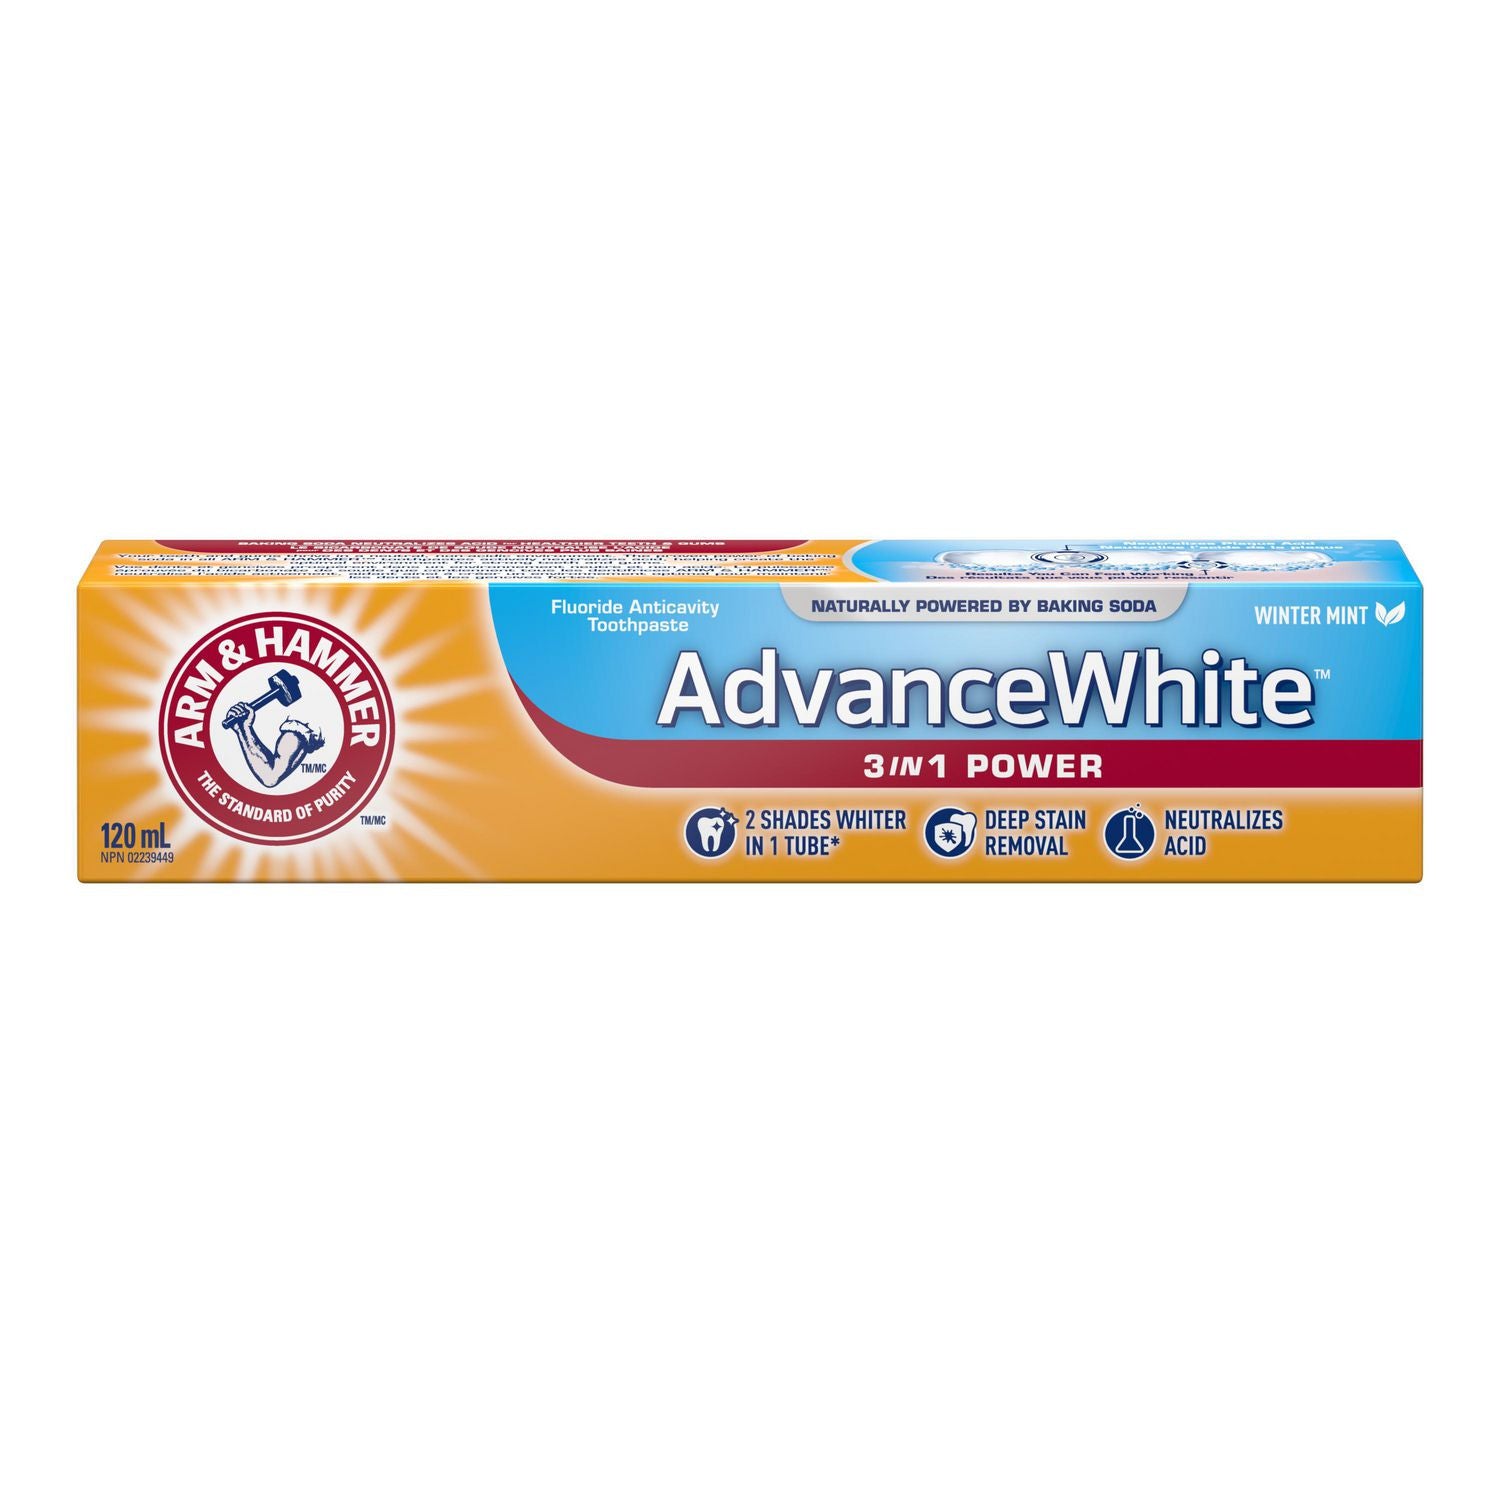 Arm & Hammer Extra Whitening Advance White Toothpaste 120mL